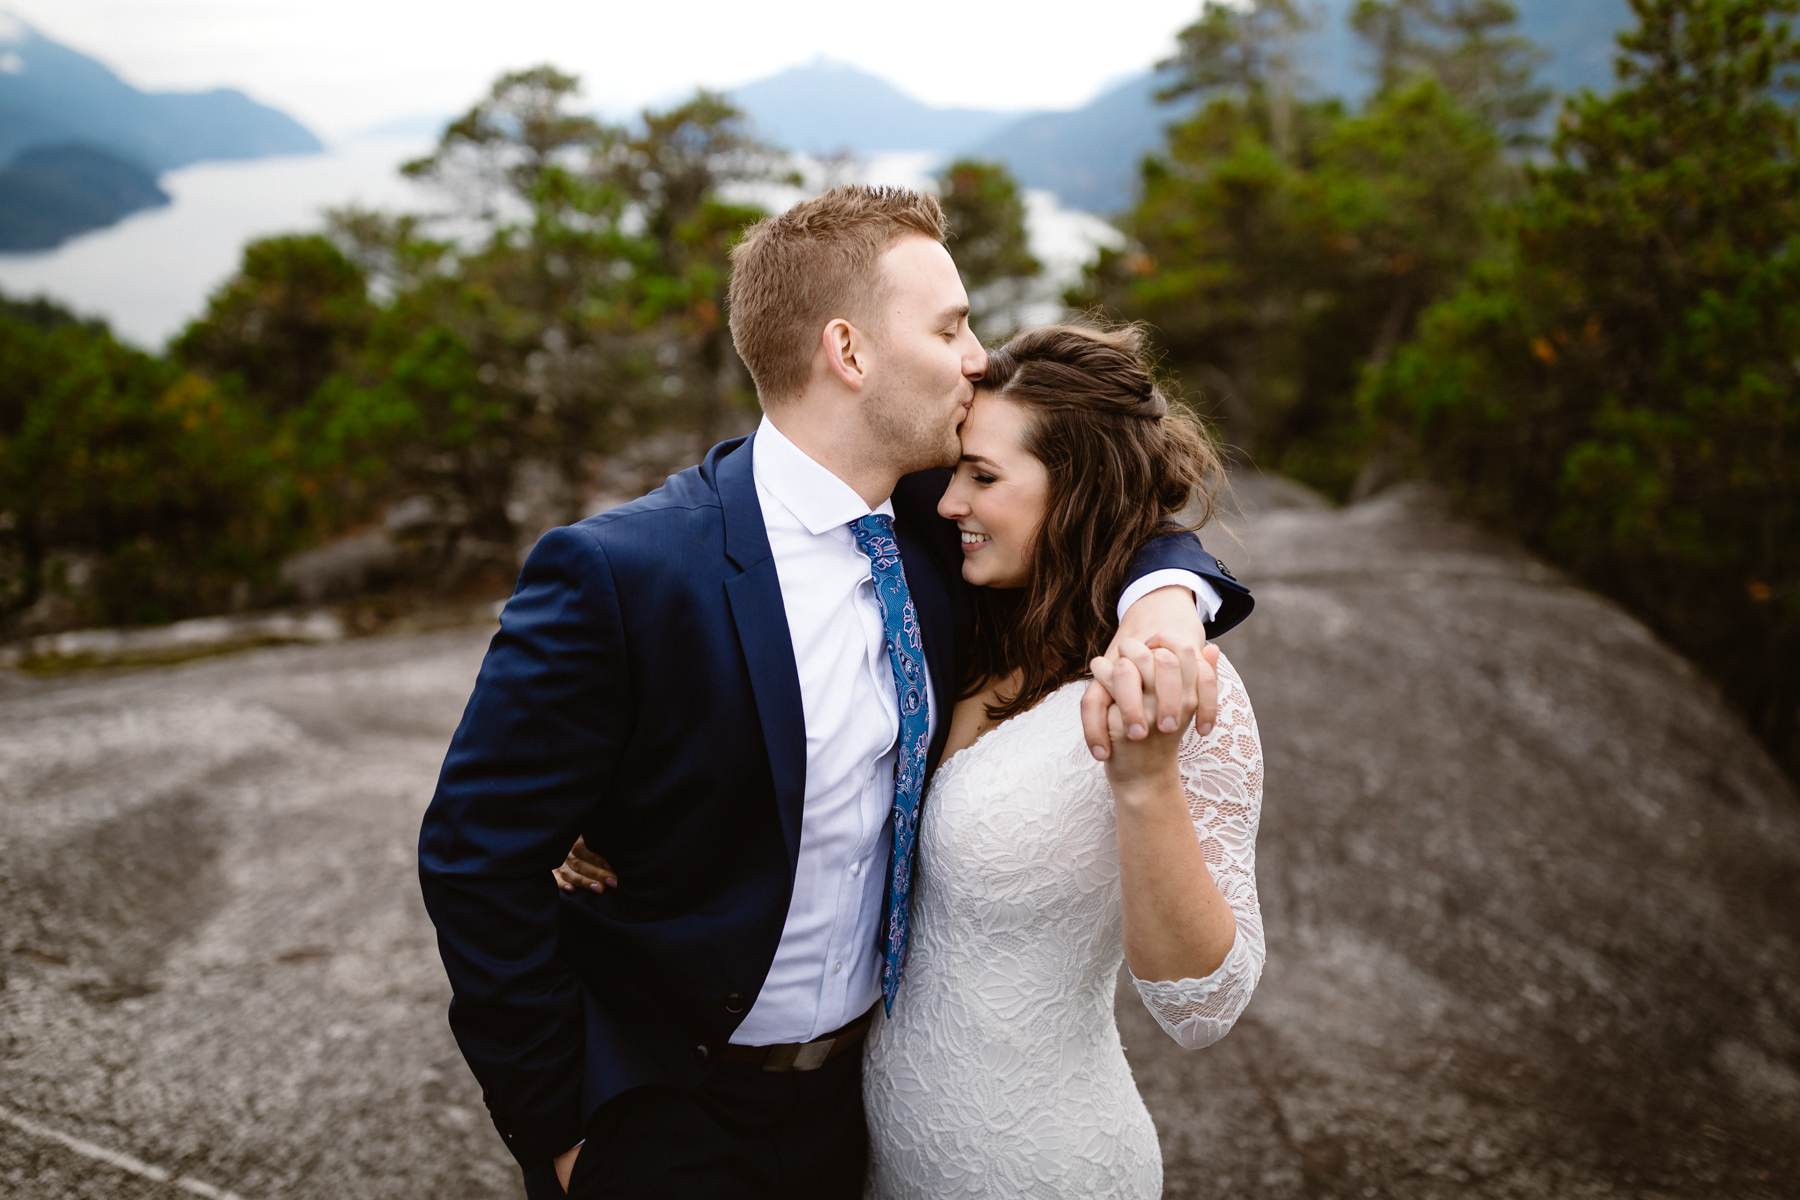 Squamish Wedding Photographers at an Adventurous Elopement - Image 35